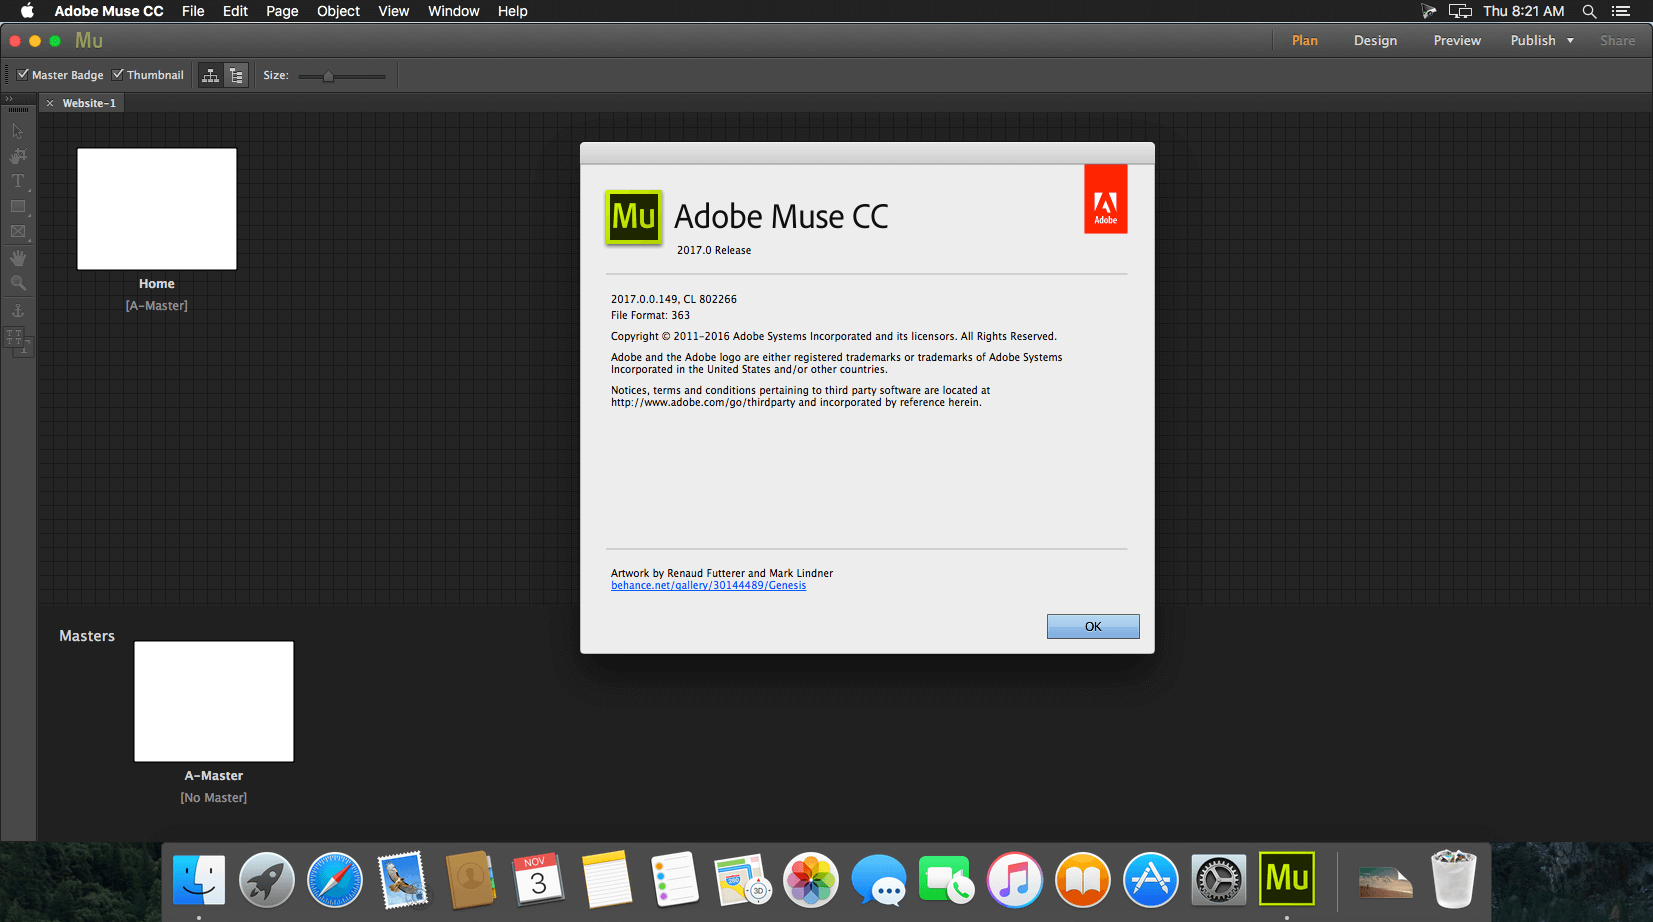 Adobe Muse CC 2017.0.0149 download